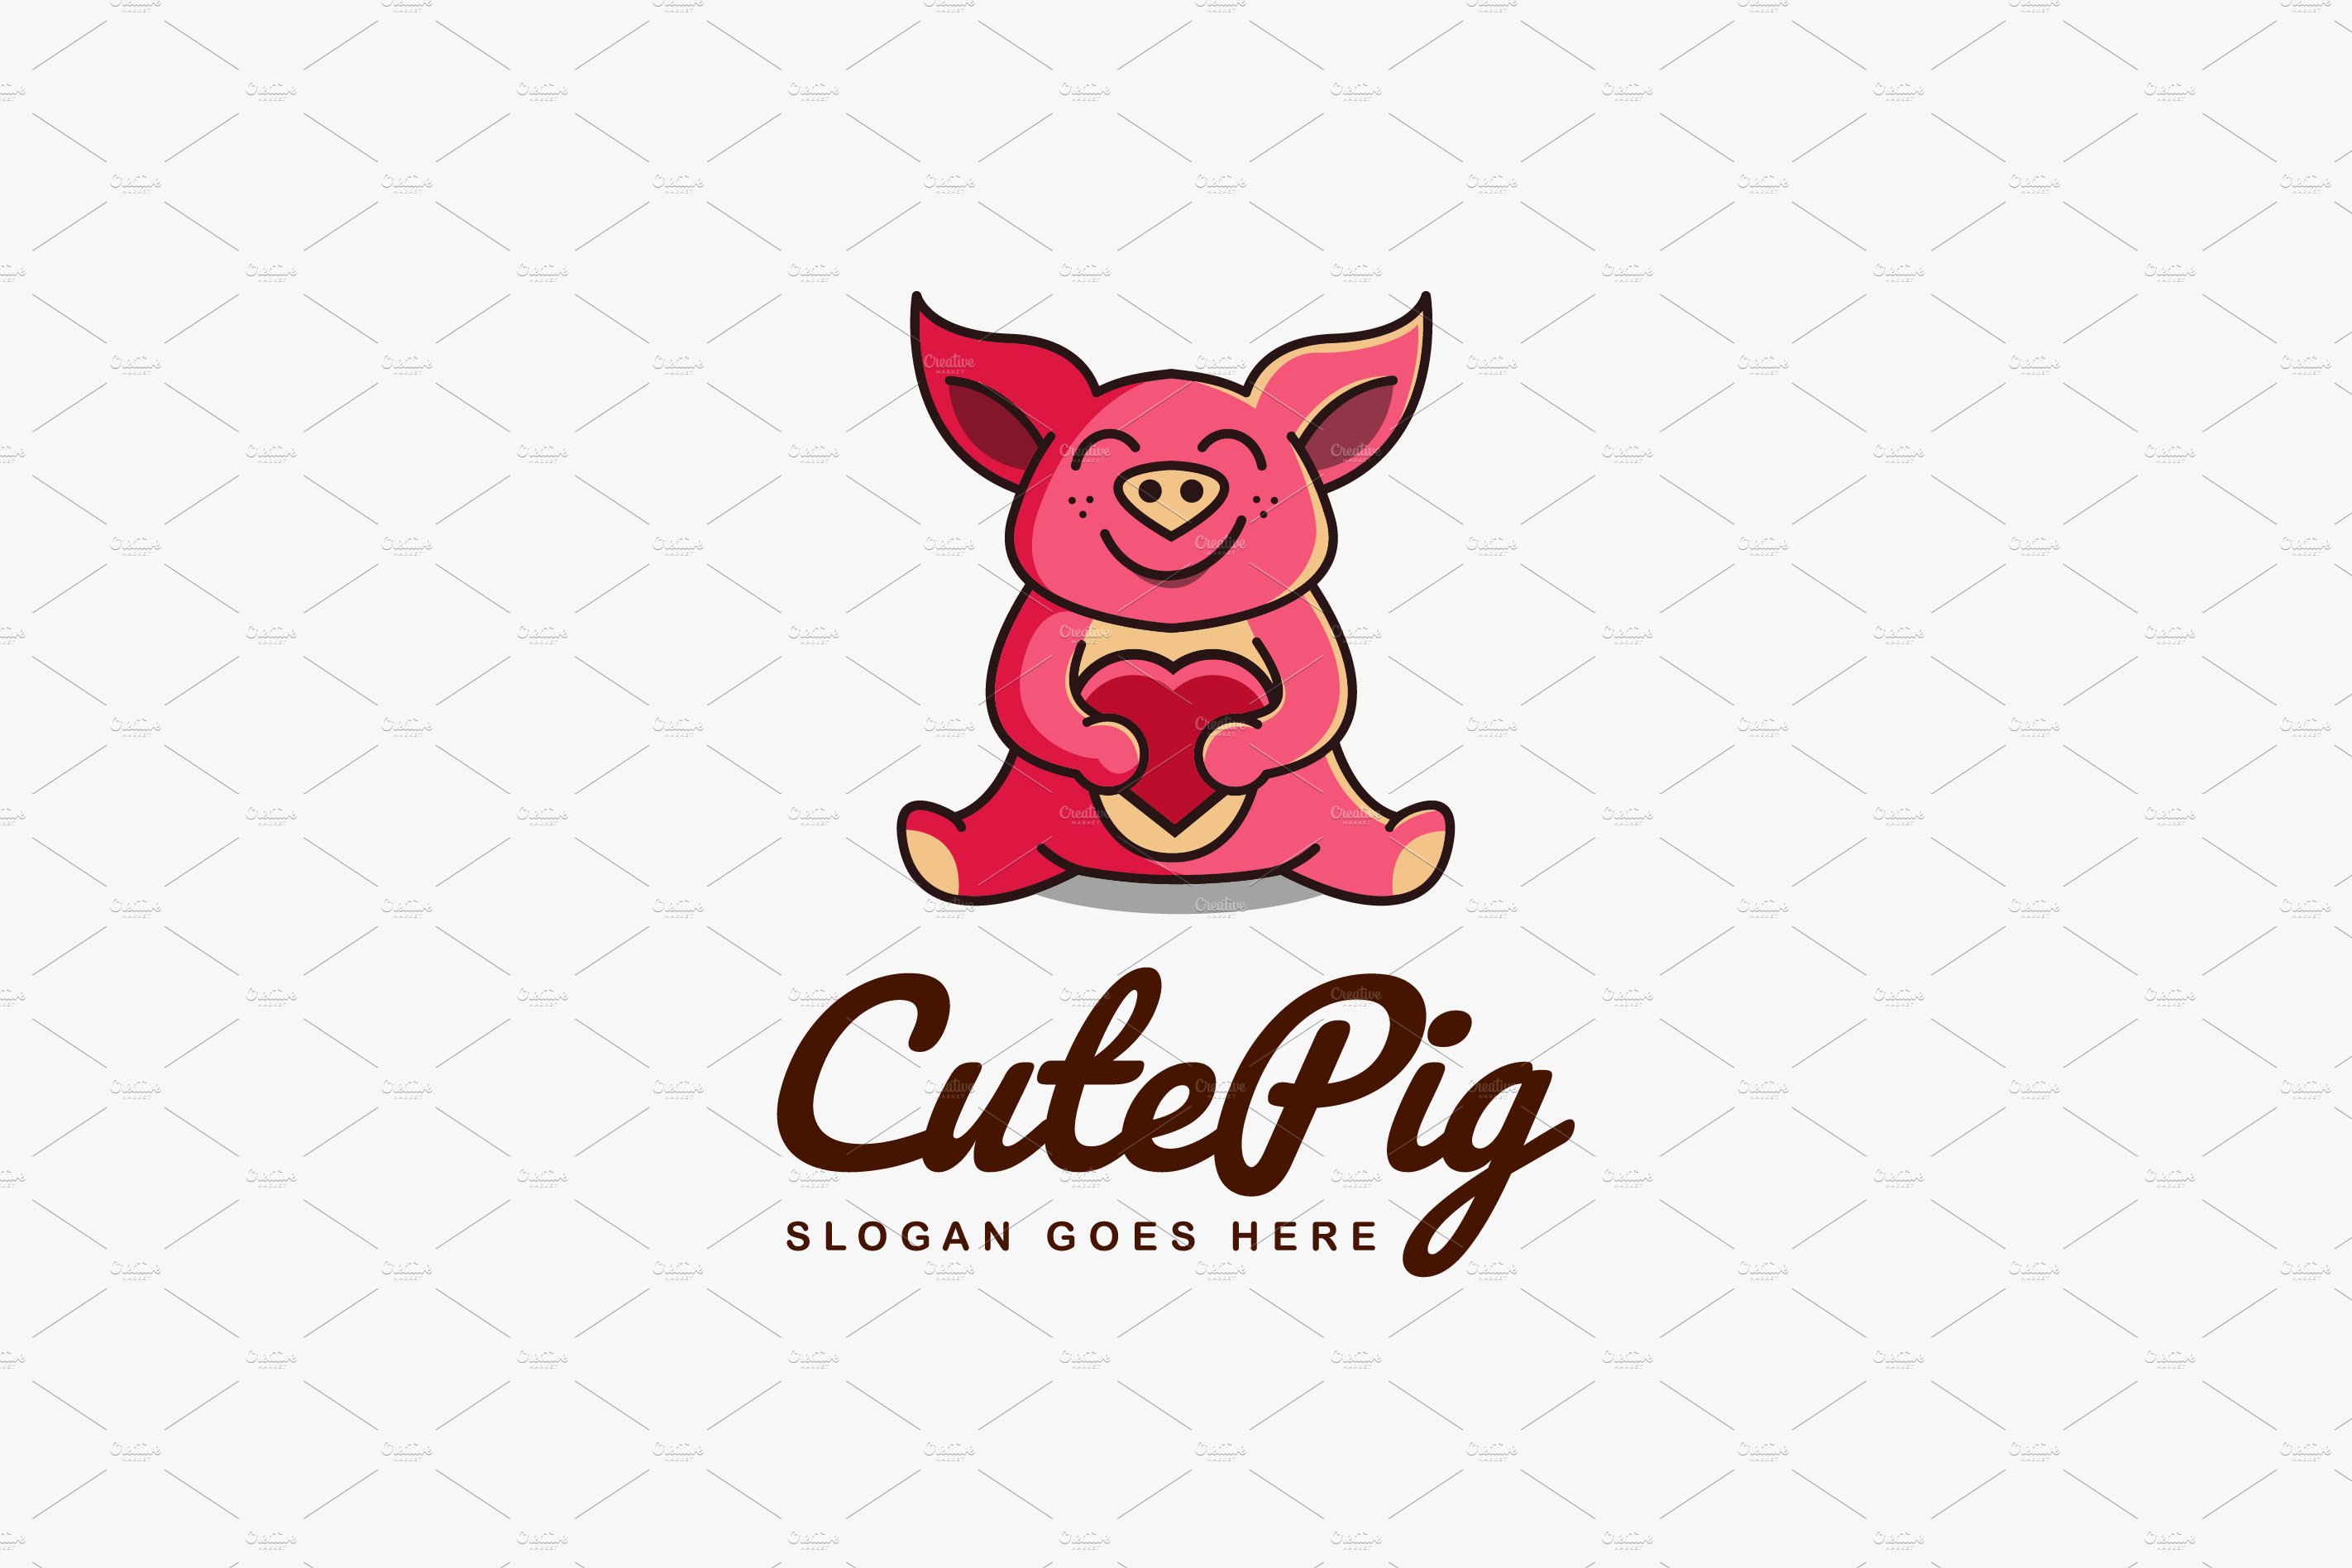 Cute pig hug a heart love logo cover image.